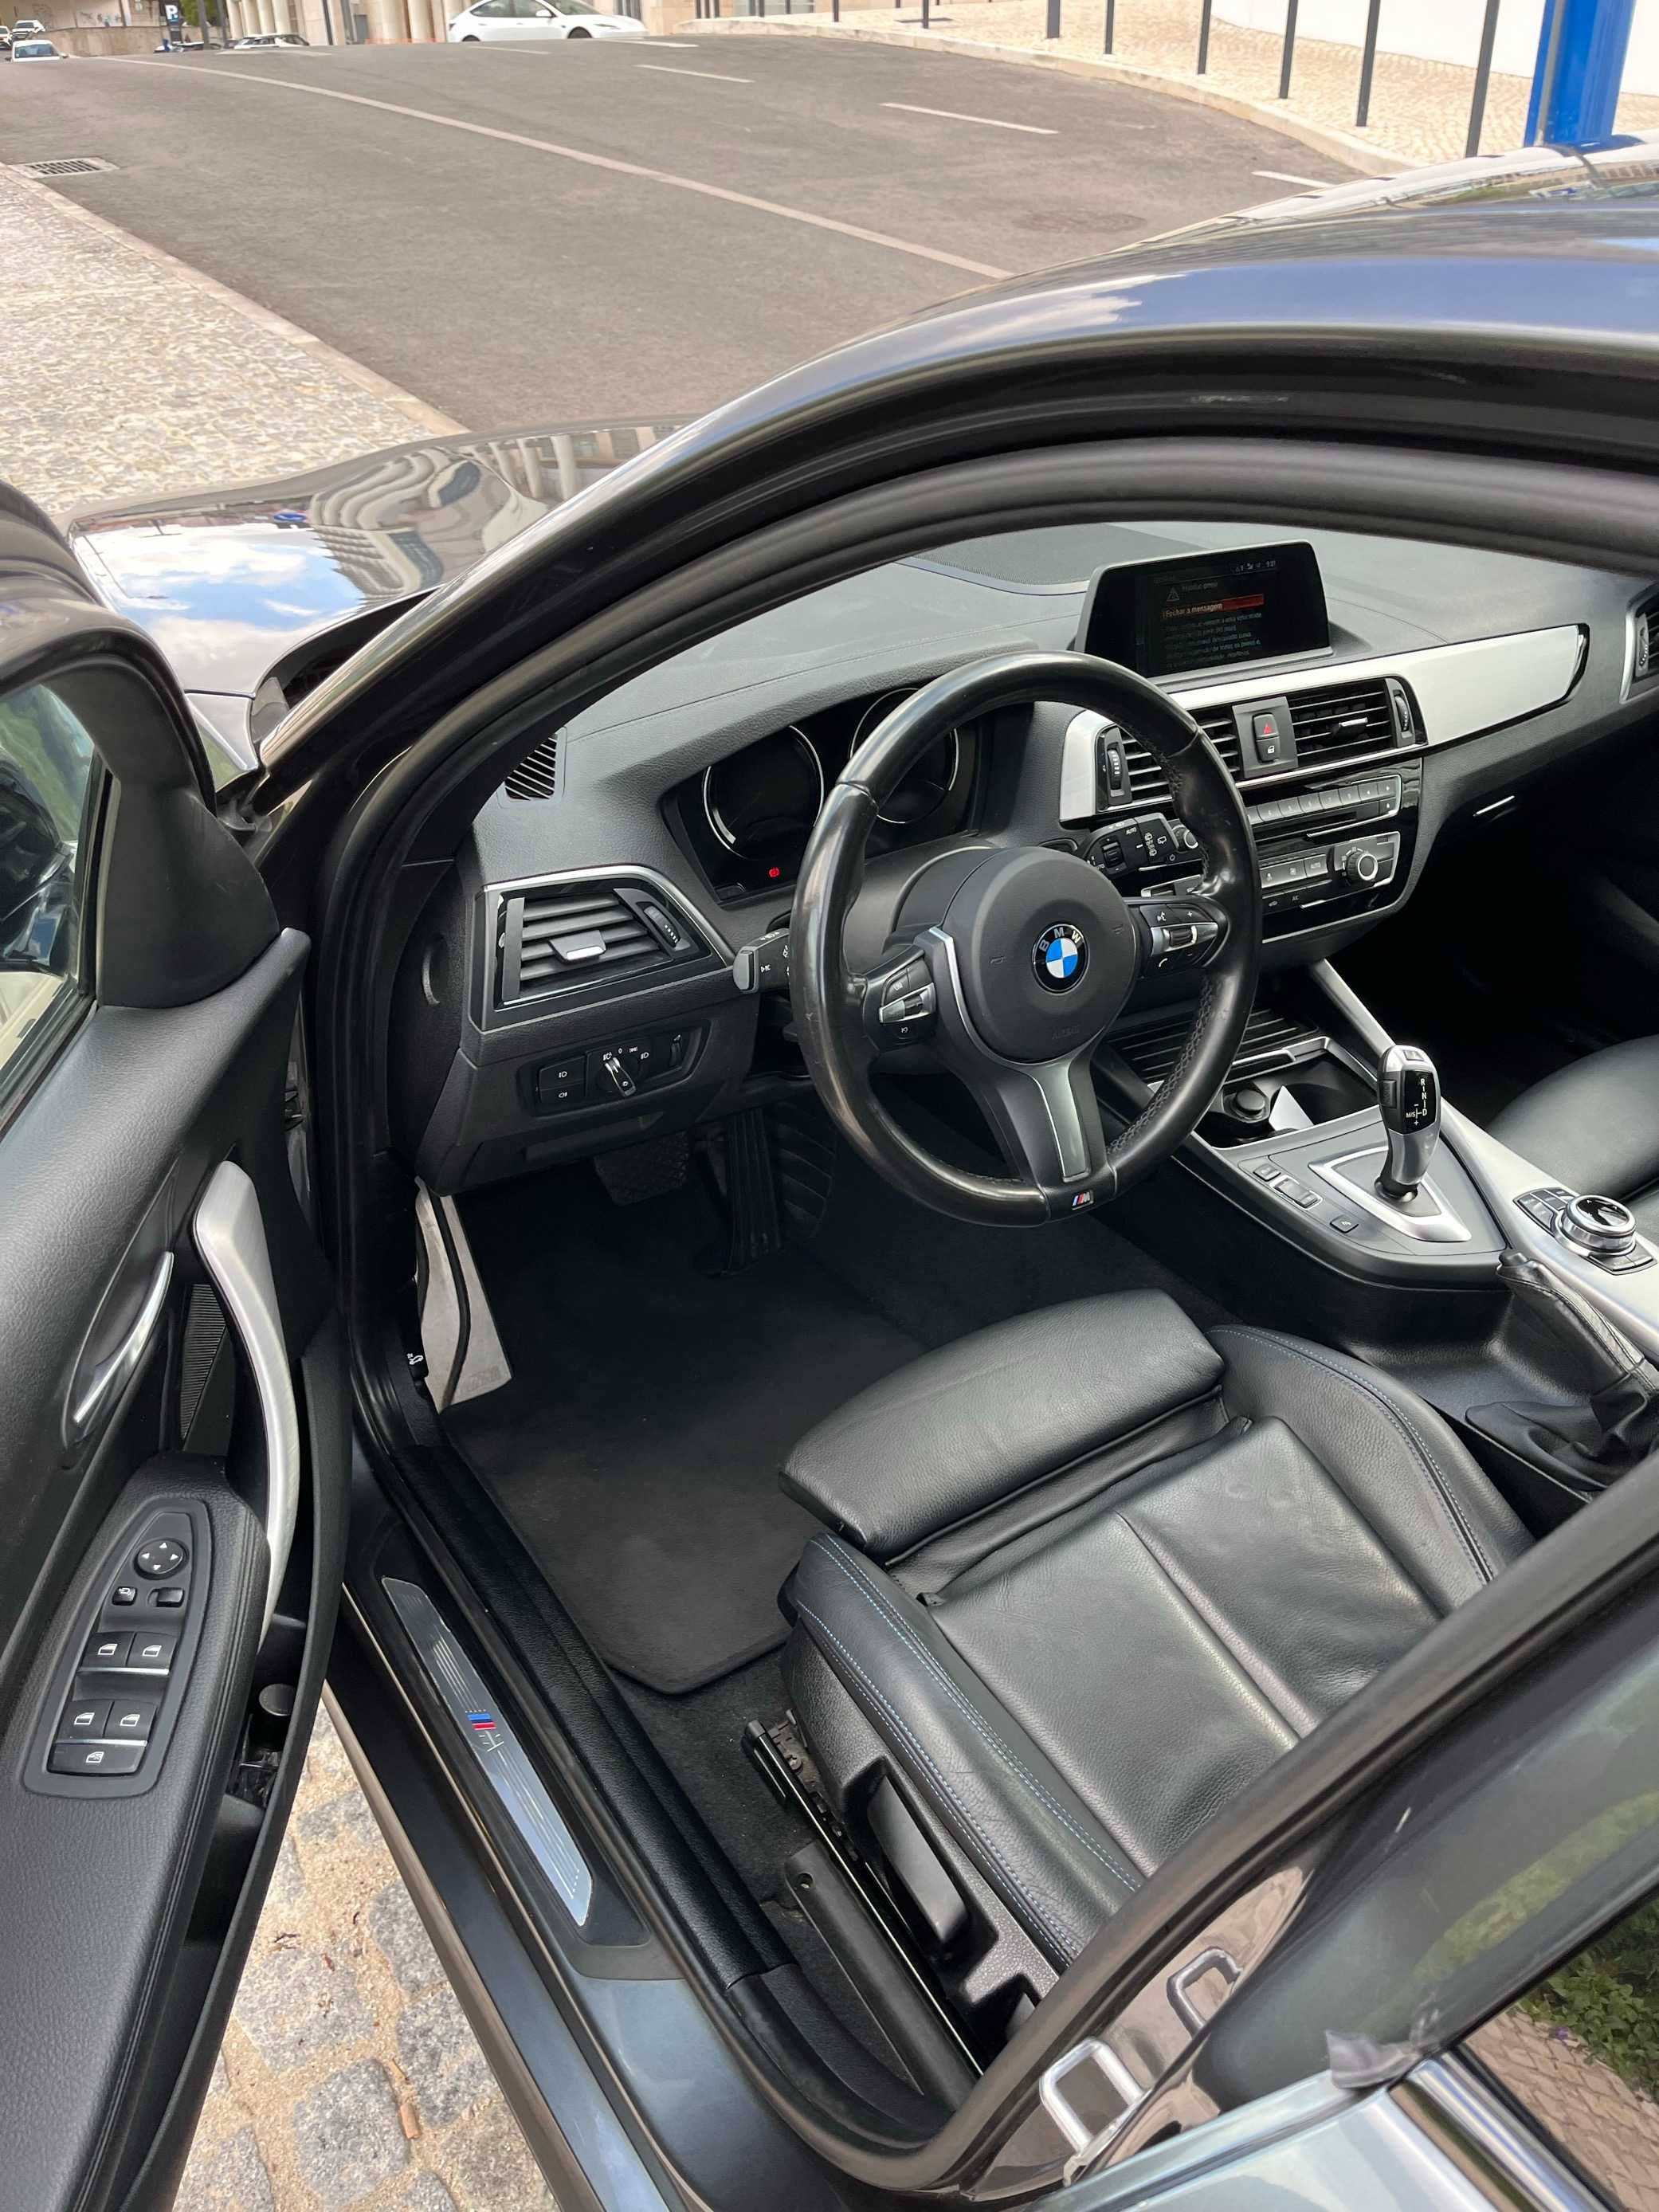 BMW 120d Pack M - outubro 2017